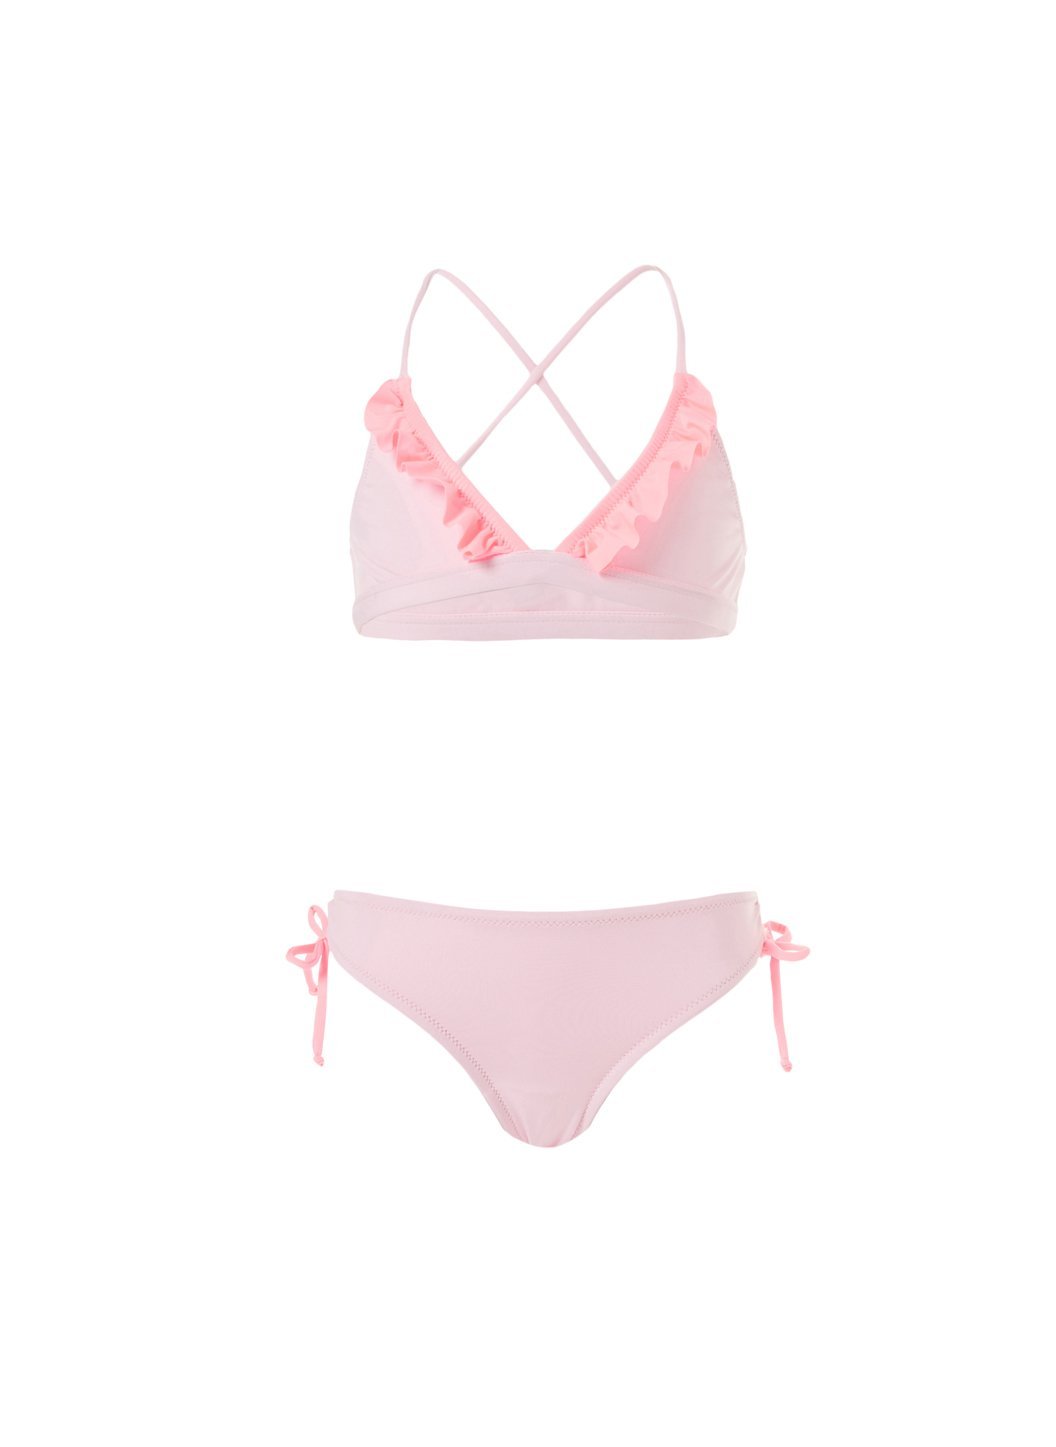 baby new york pale pink neon triangle bikini 2019